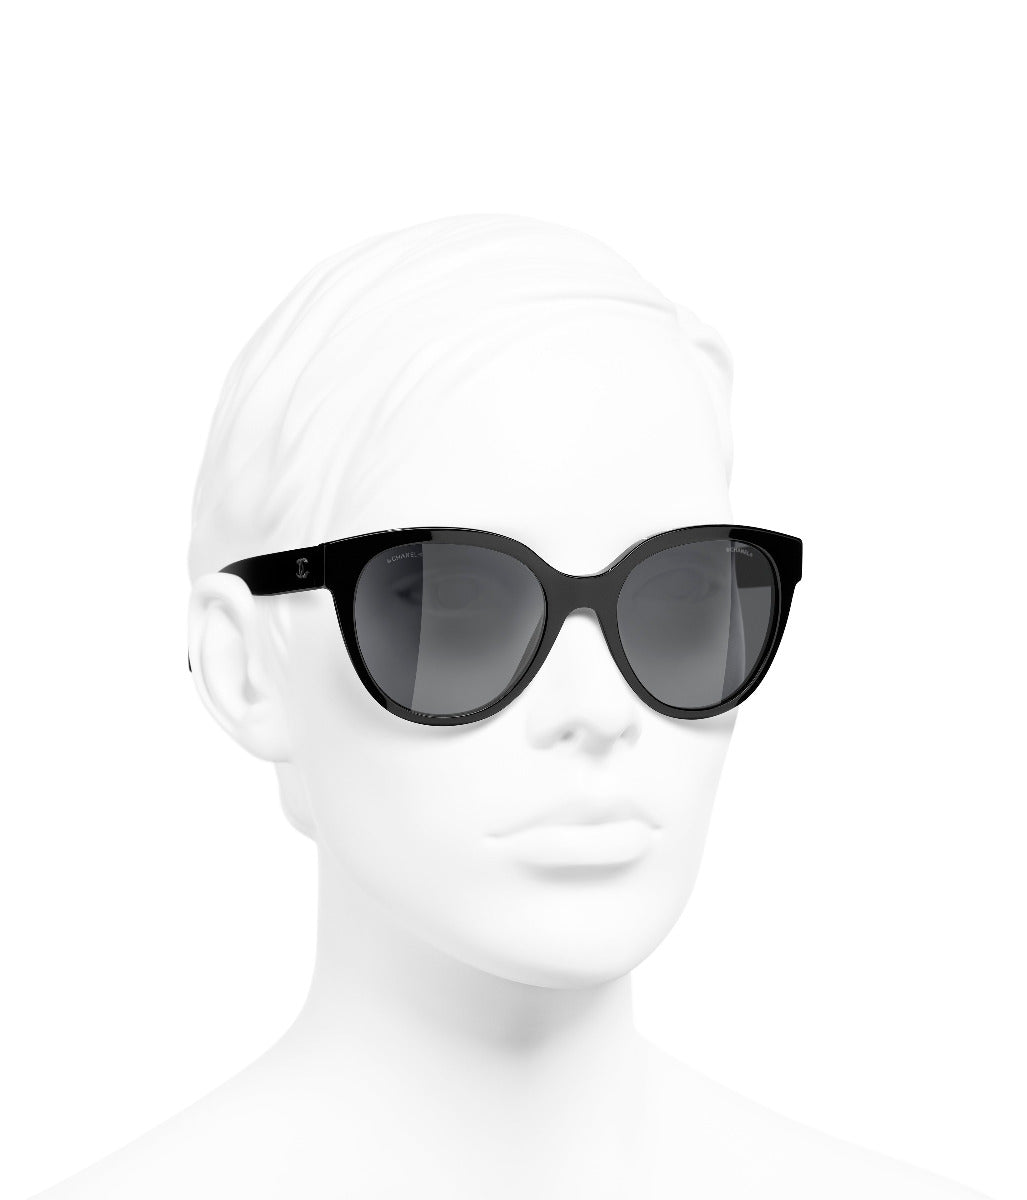 chanel sunglasses 2020